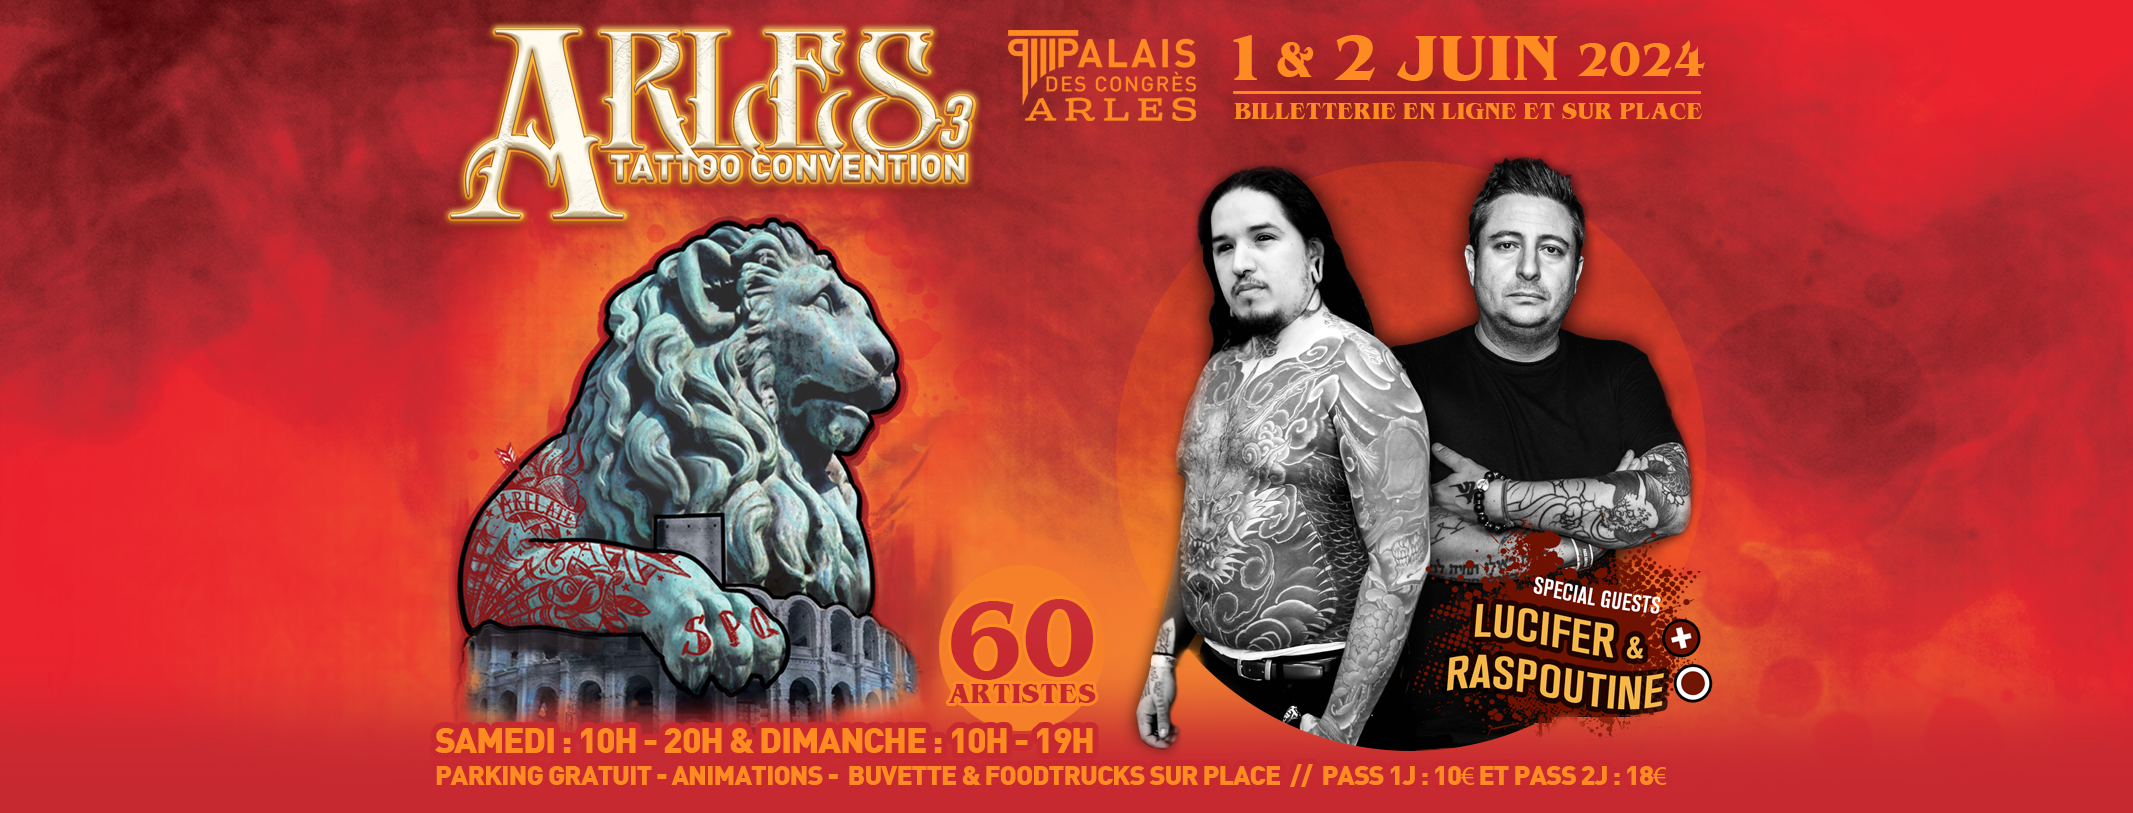 International Arles Tattoo Convention #3